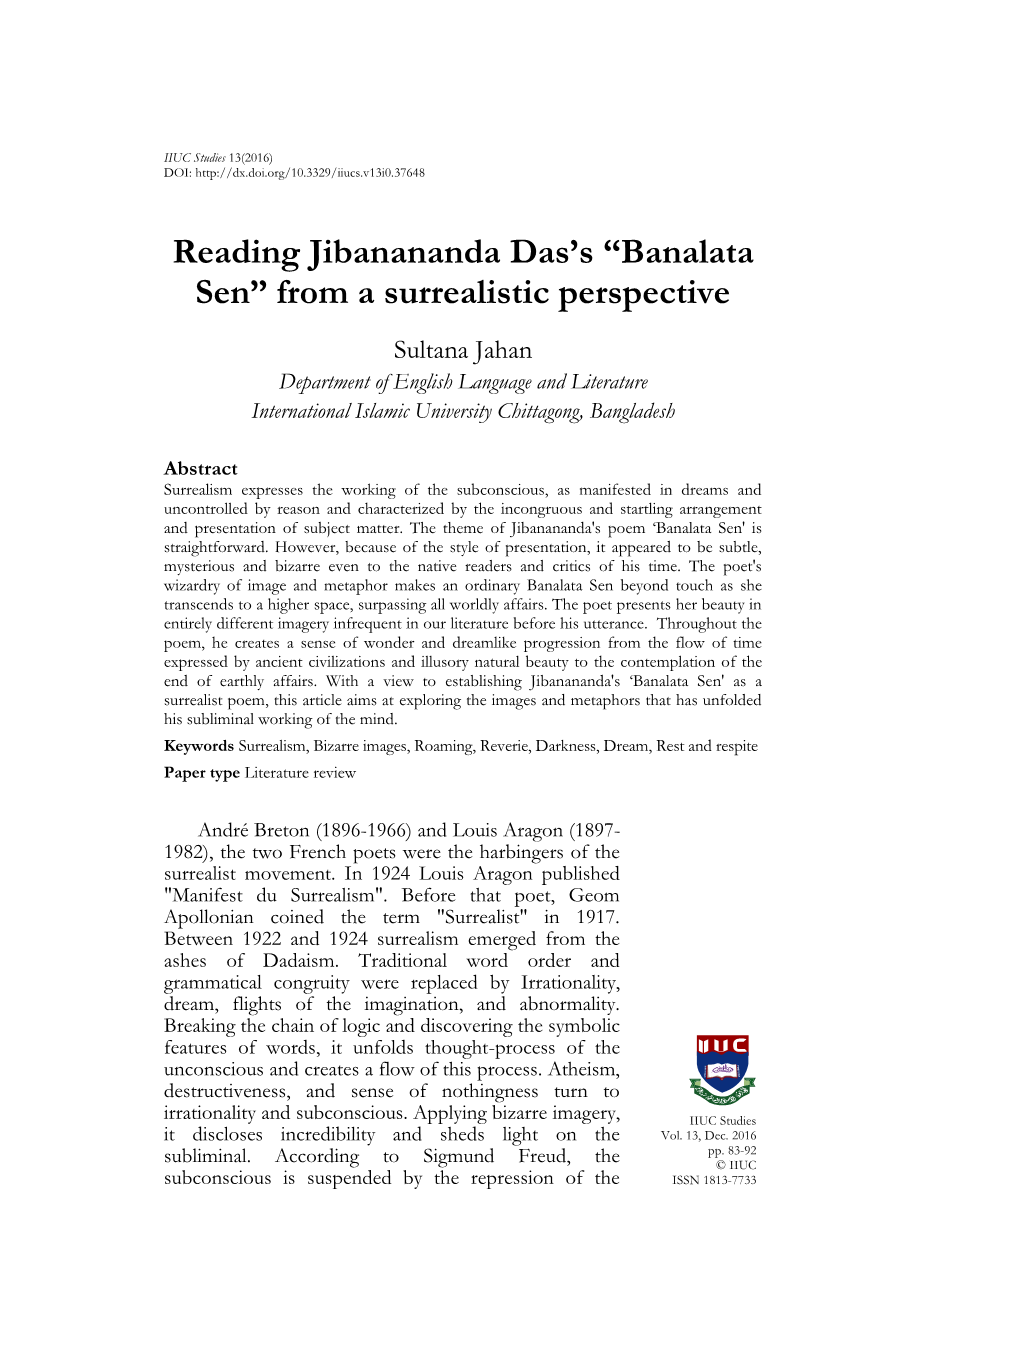 Reading Jibanananda Das's “Banalata Sen” from a Surrealistic